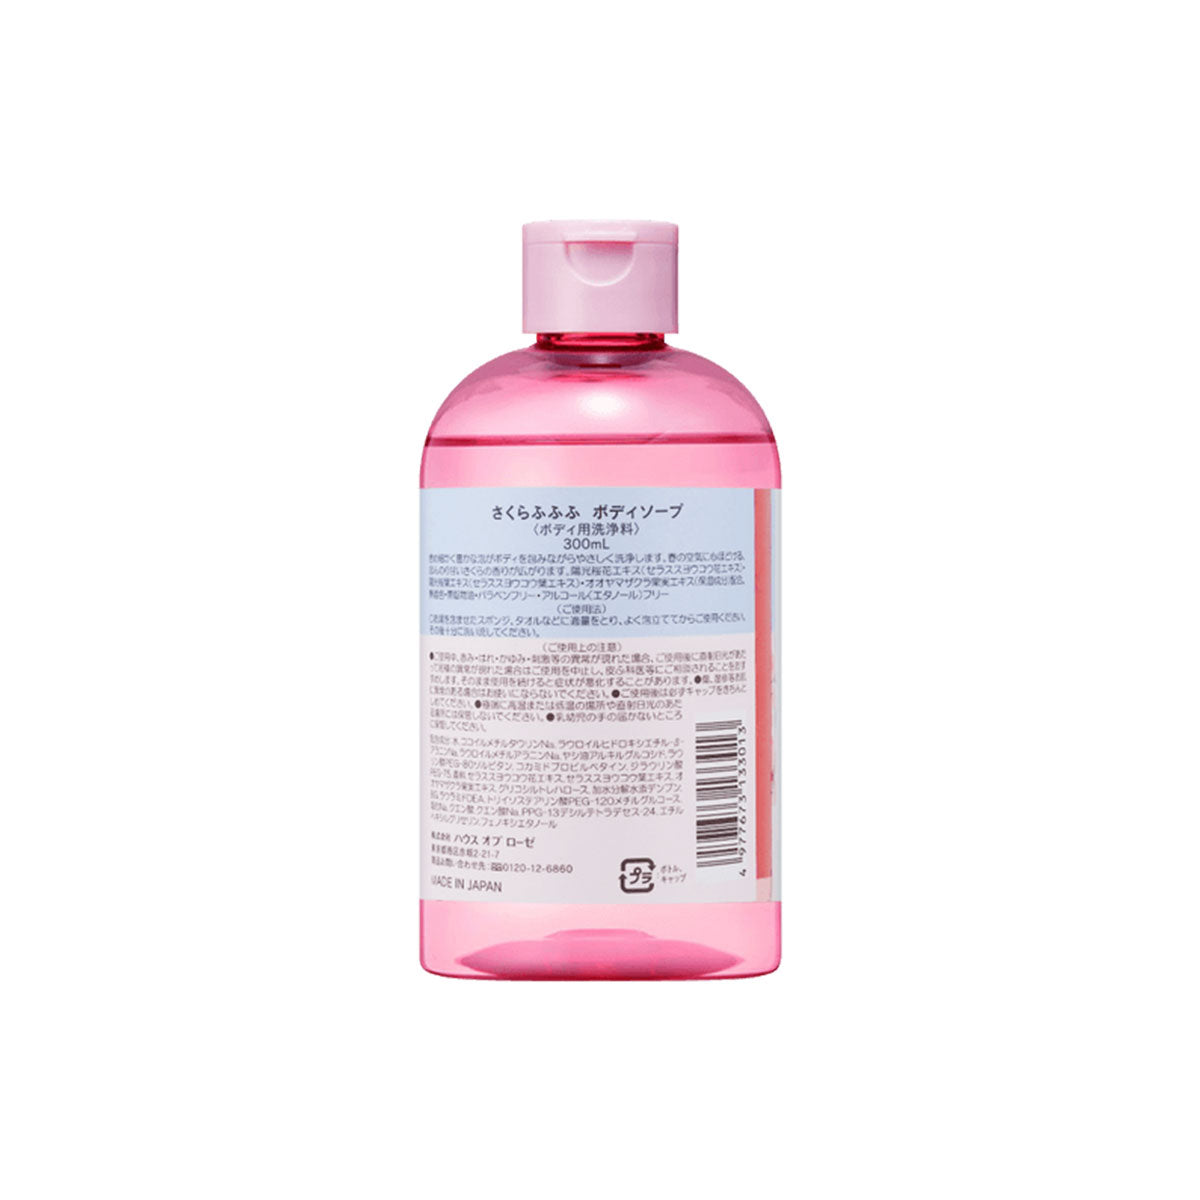 Body Soap #Sakura Limited  300ml